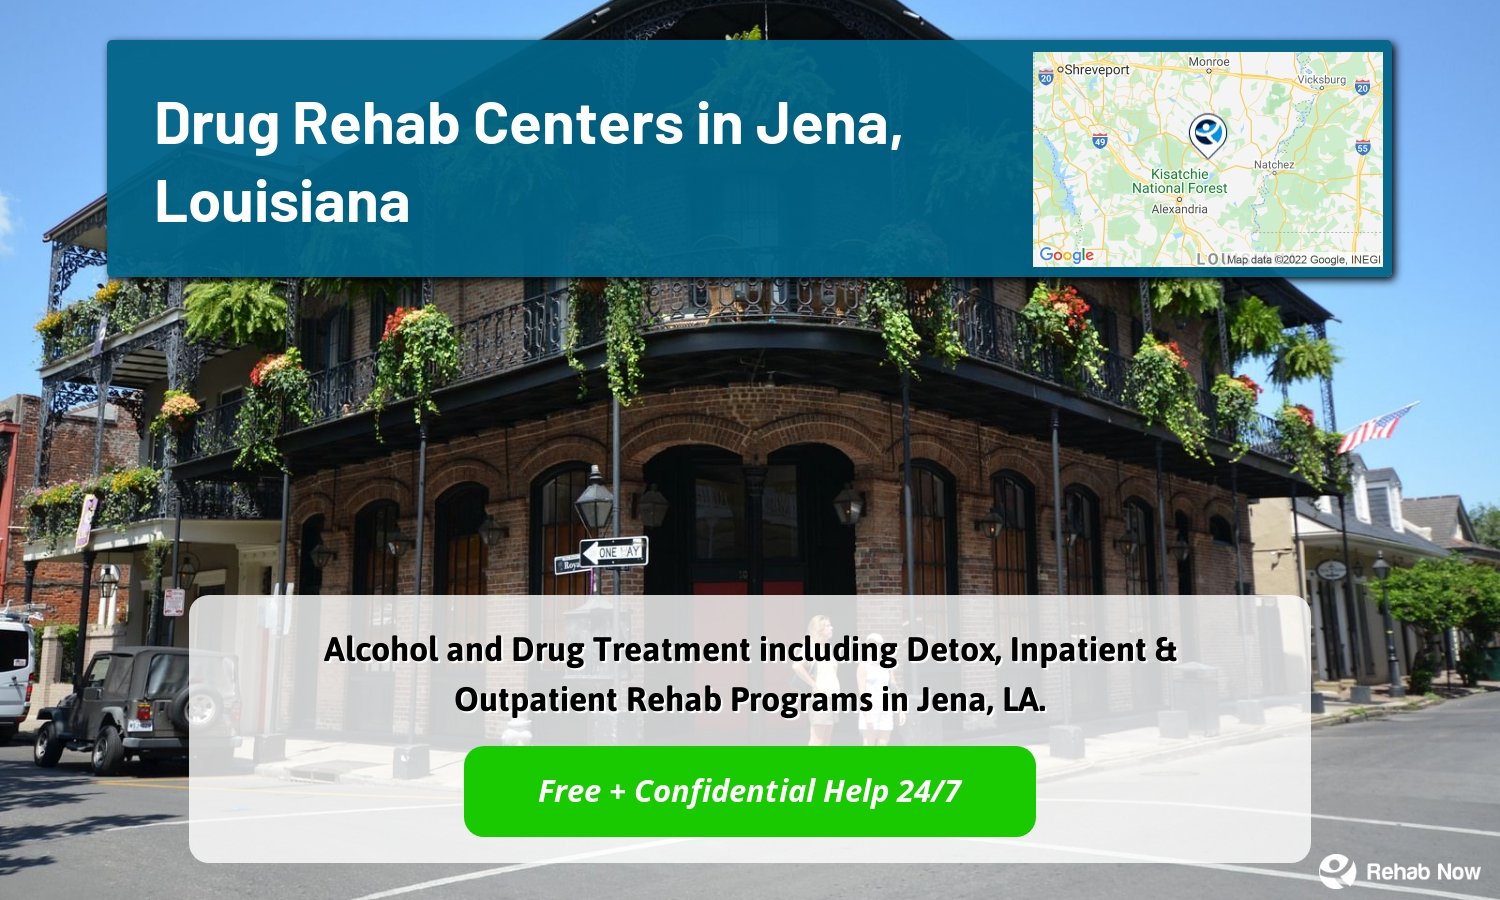 Alcohol and Drug Treatment including Detox, Inpatient & Outpatient Rehab Programs in Jena, LA.